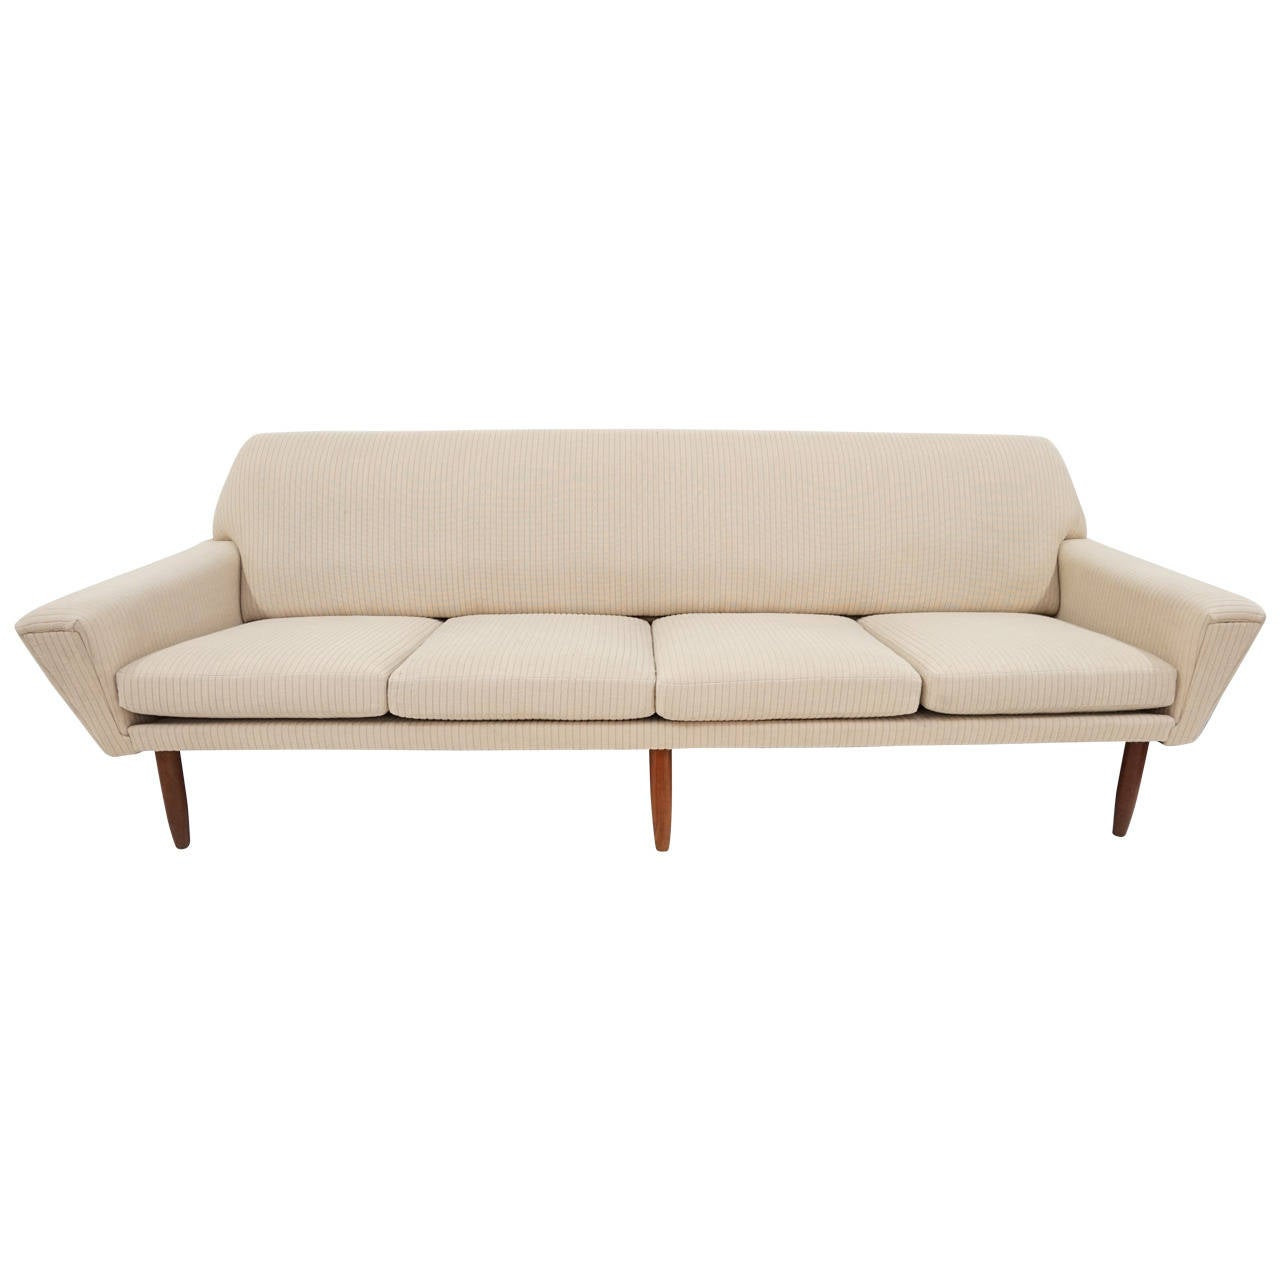 Best ideas about Danish Modern Sofa
. Save or Pin Danish Modern Sofa at 1stdibs Now.